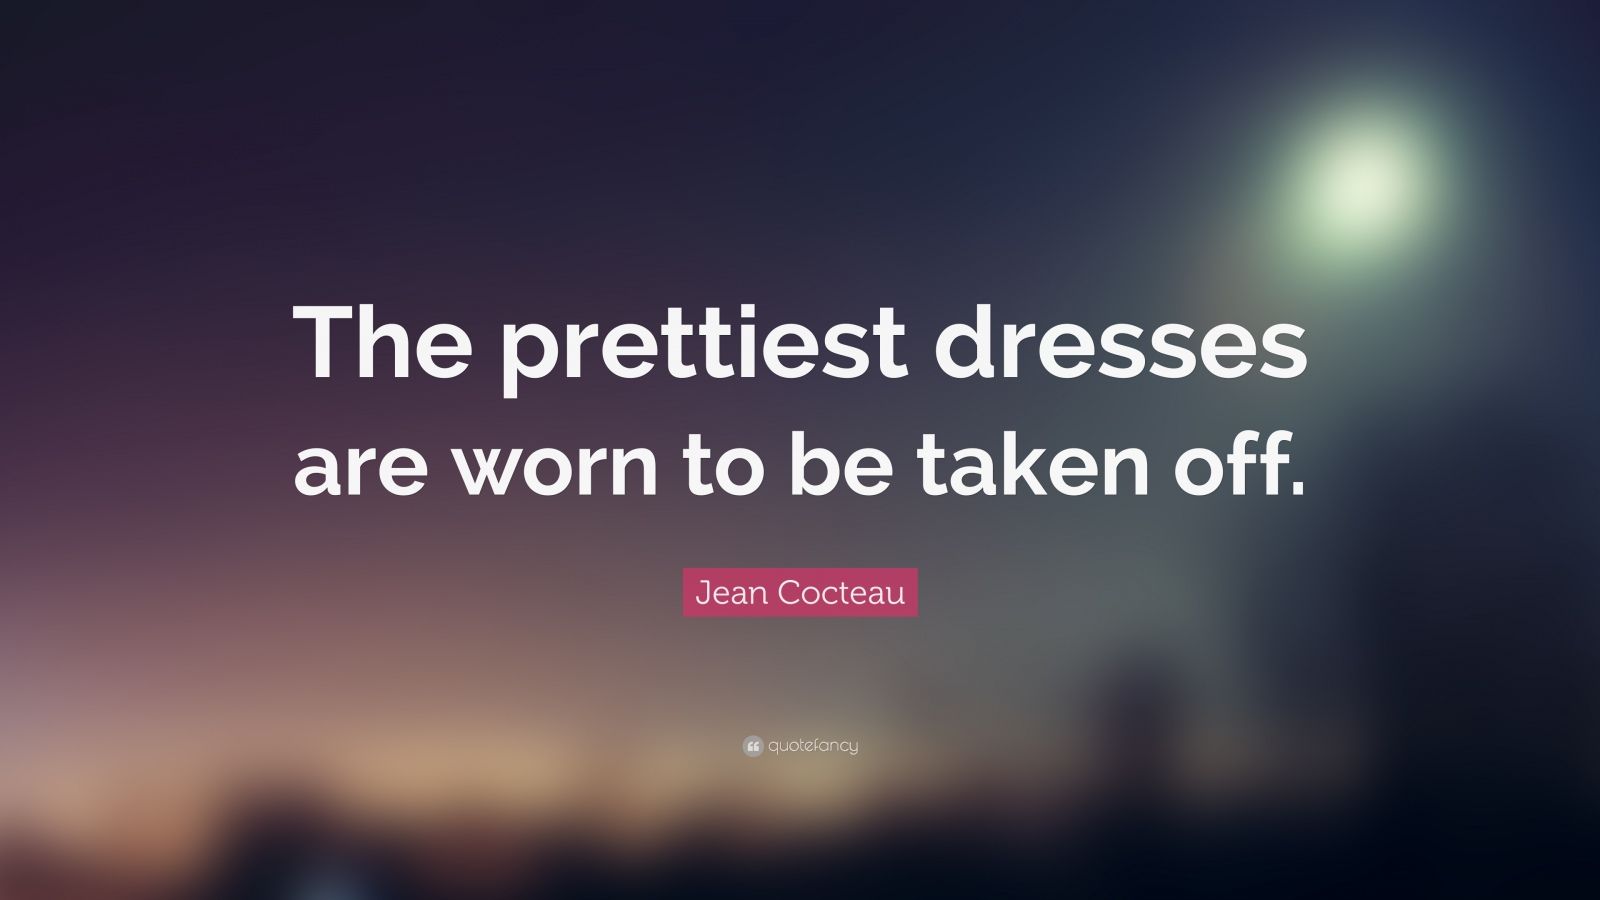 Jean Cocteau Quote: “The prettiest ...